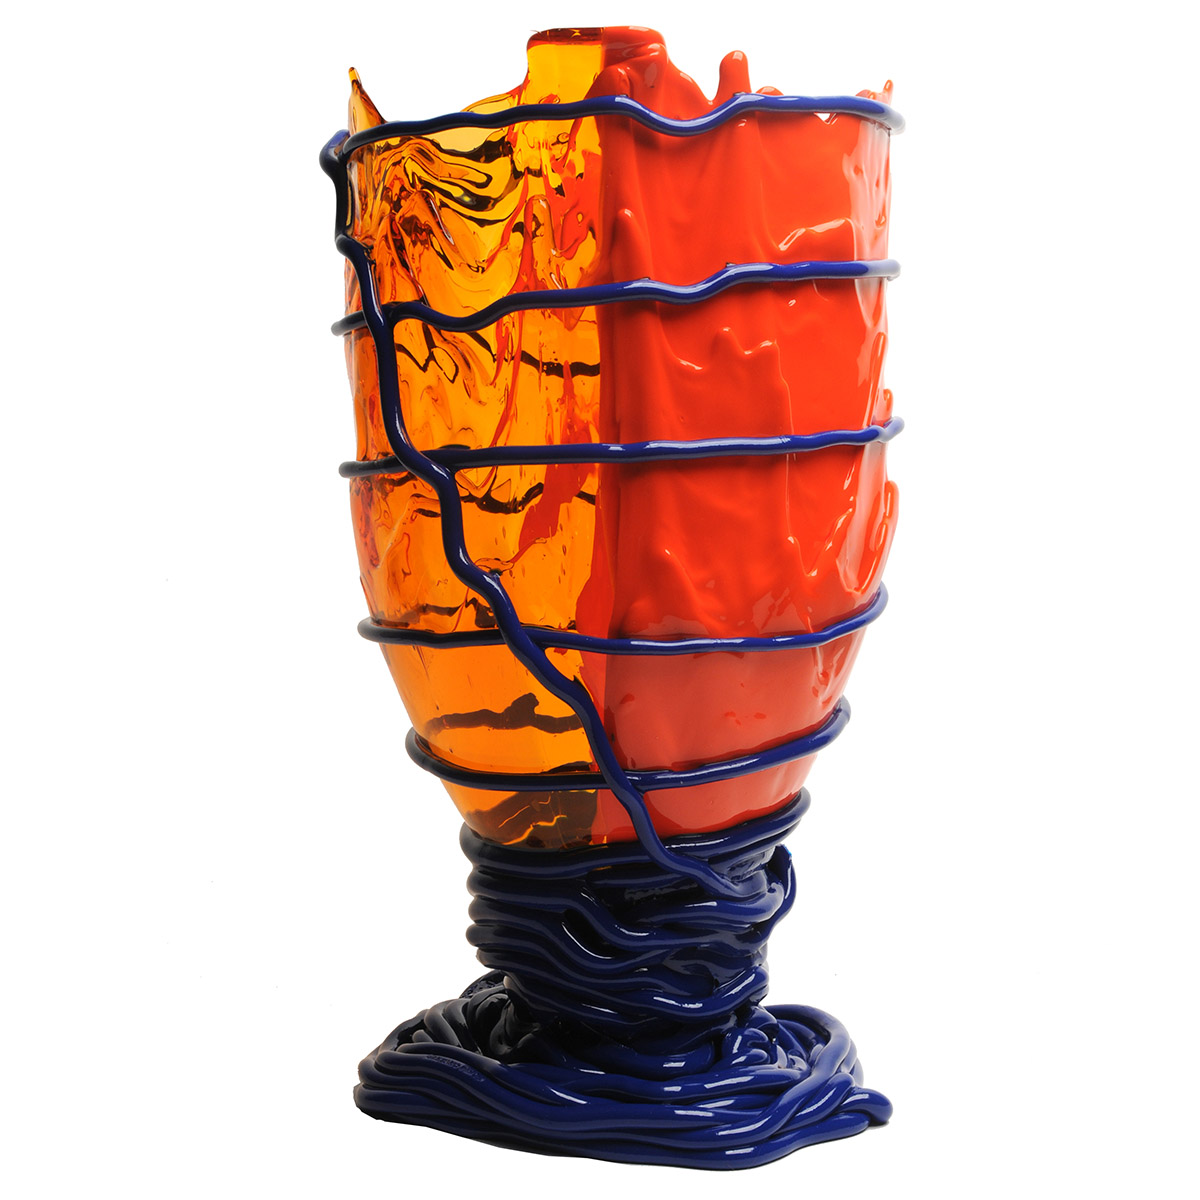 Vaso in resina Pompitu II extra colour